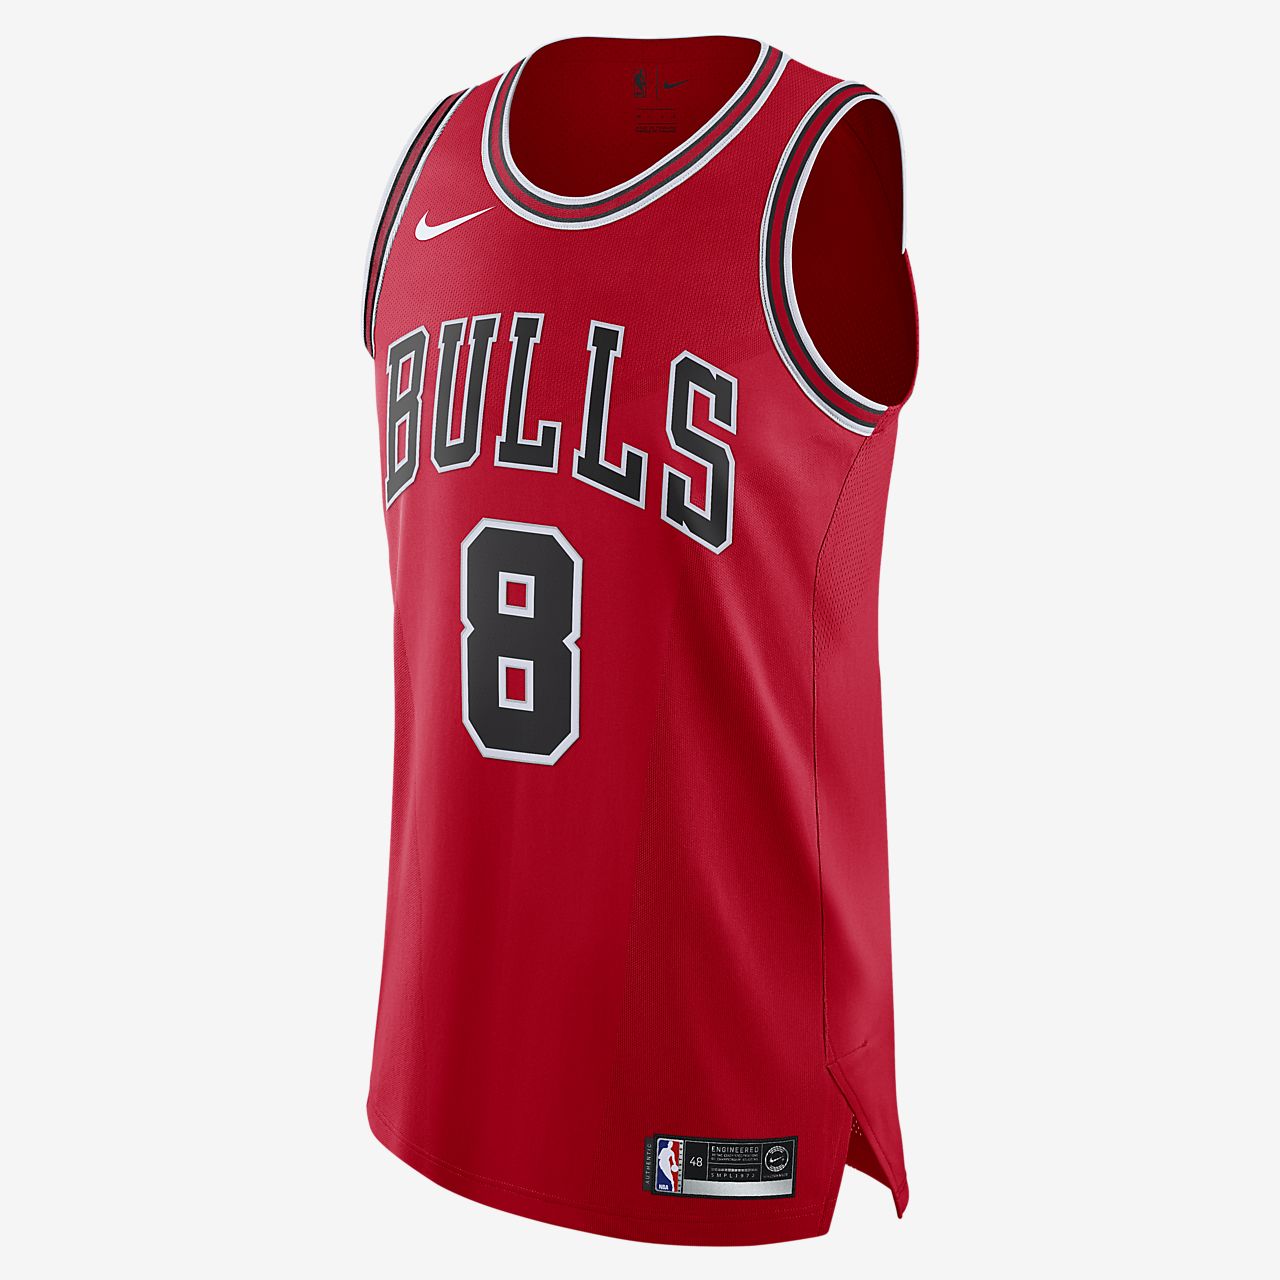 Camiseta Nike NBA Authentic Bulls Icon Edition.